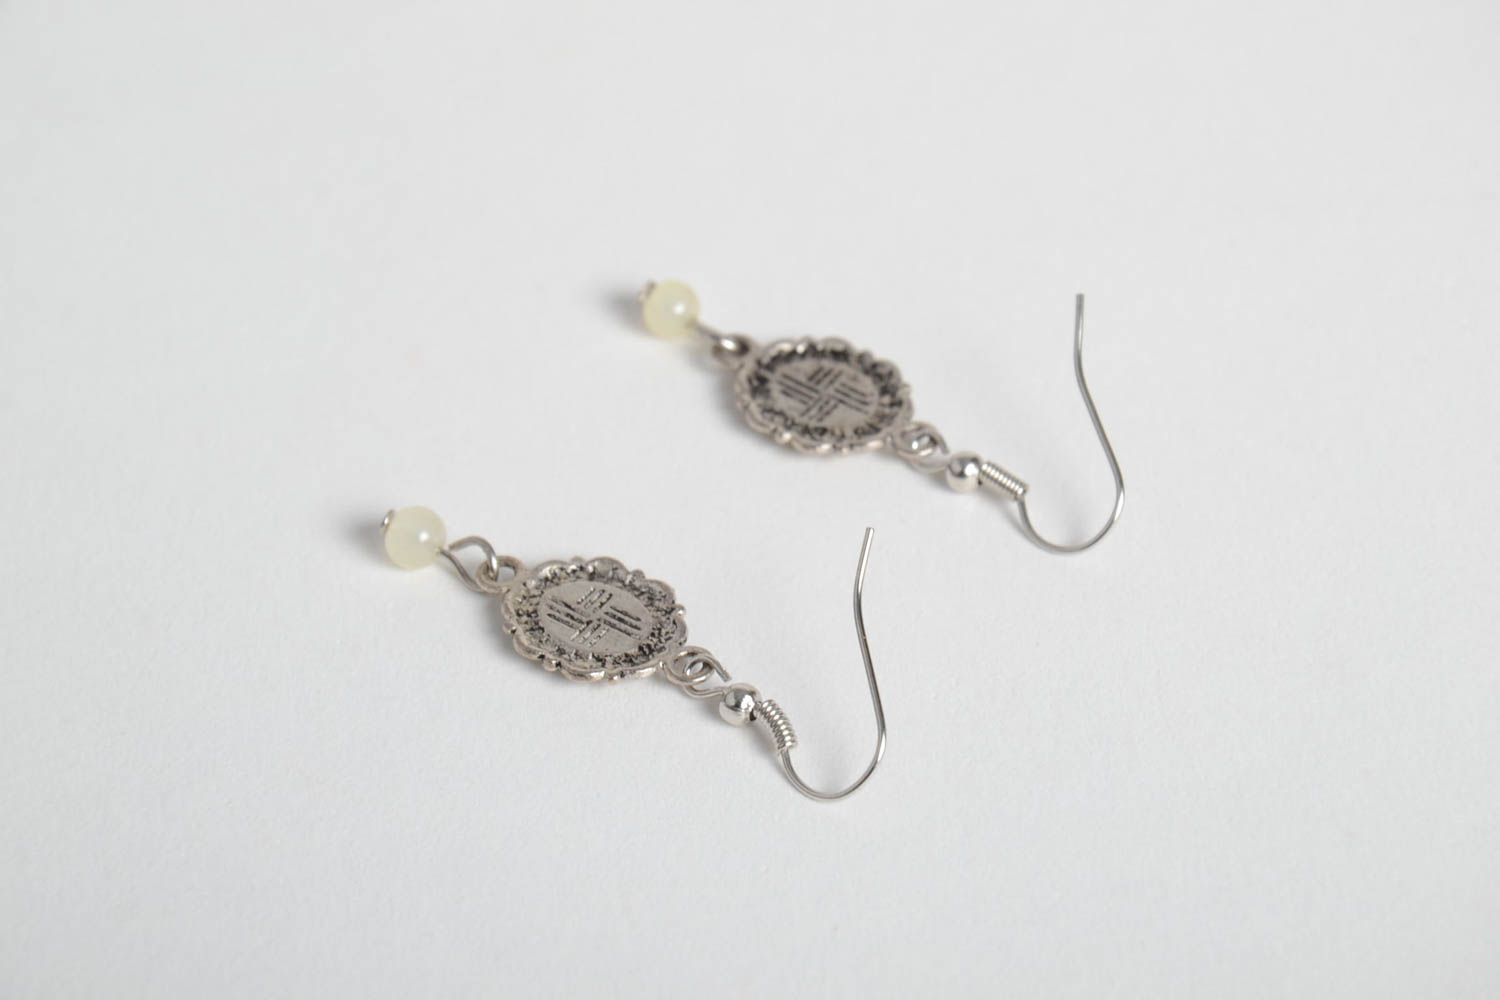 Handmade vintage jewelry unusual earrings with charms designer earrings photo 3